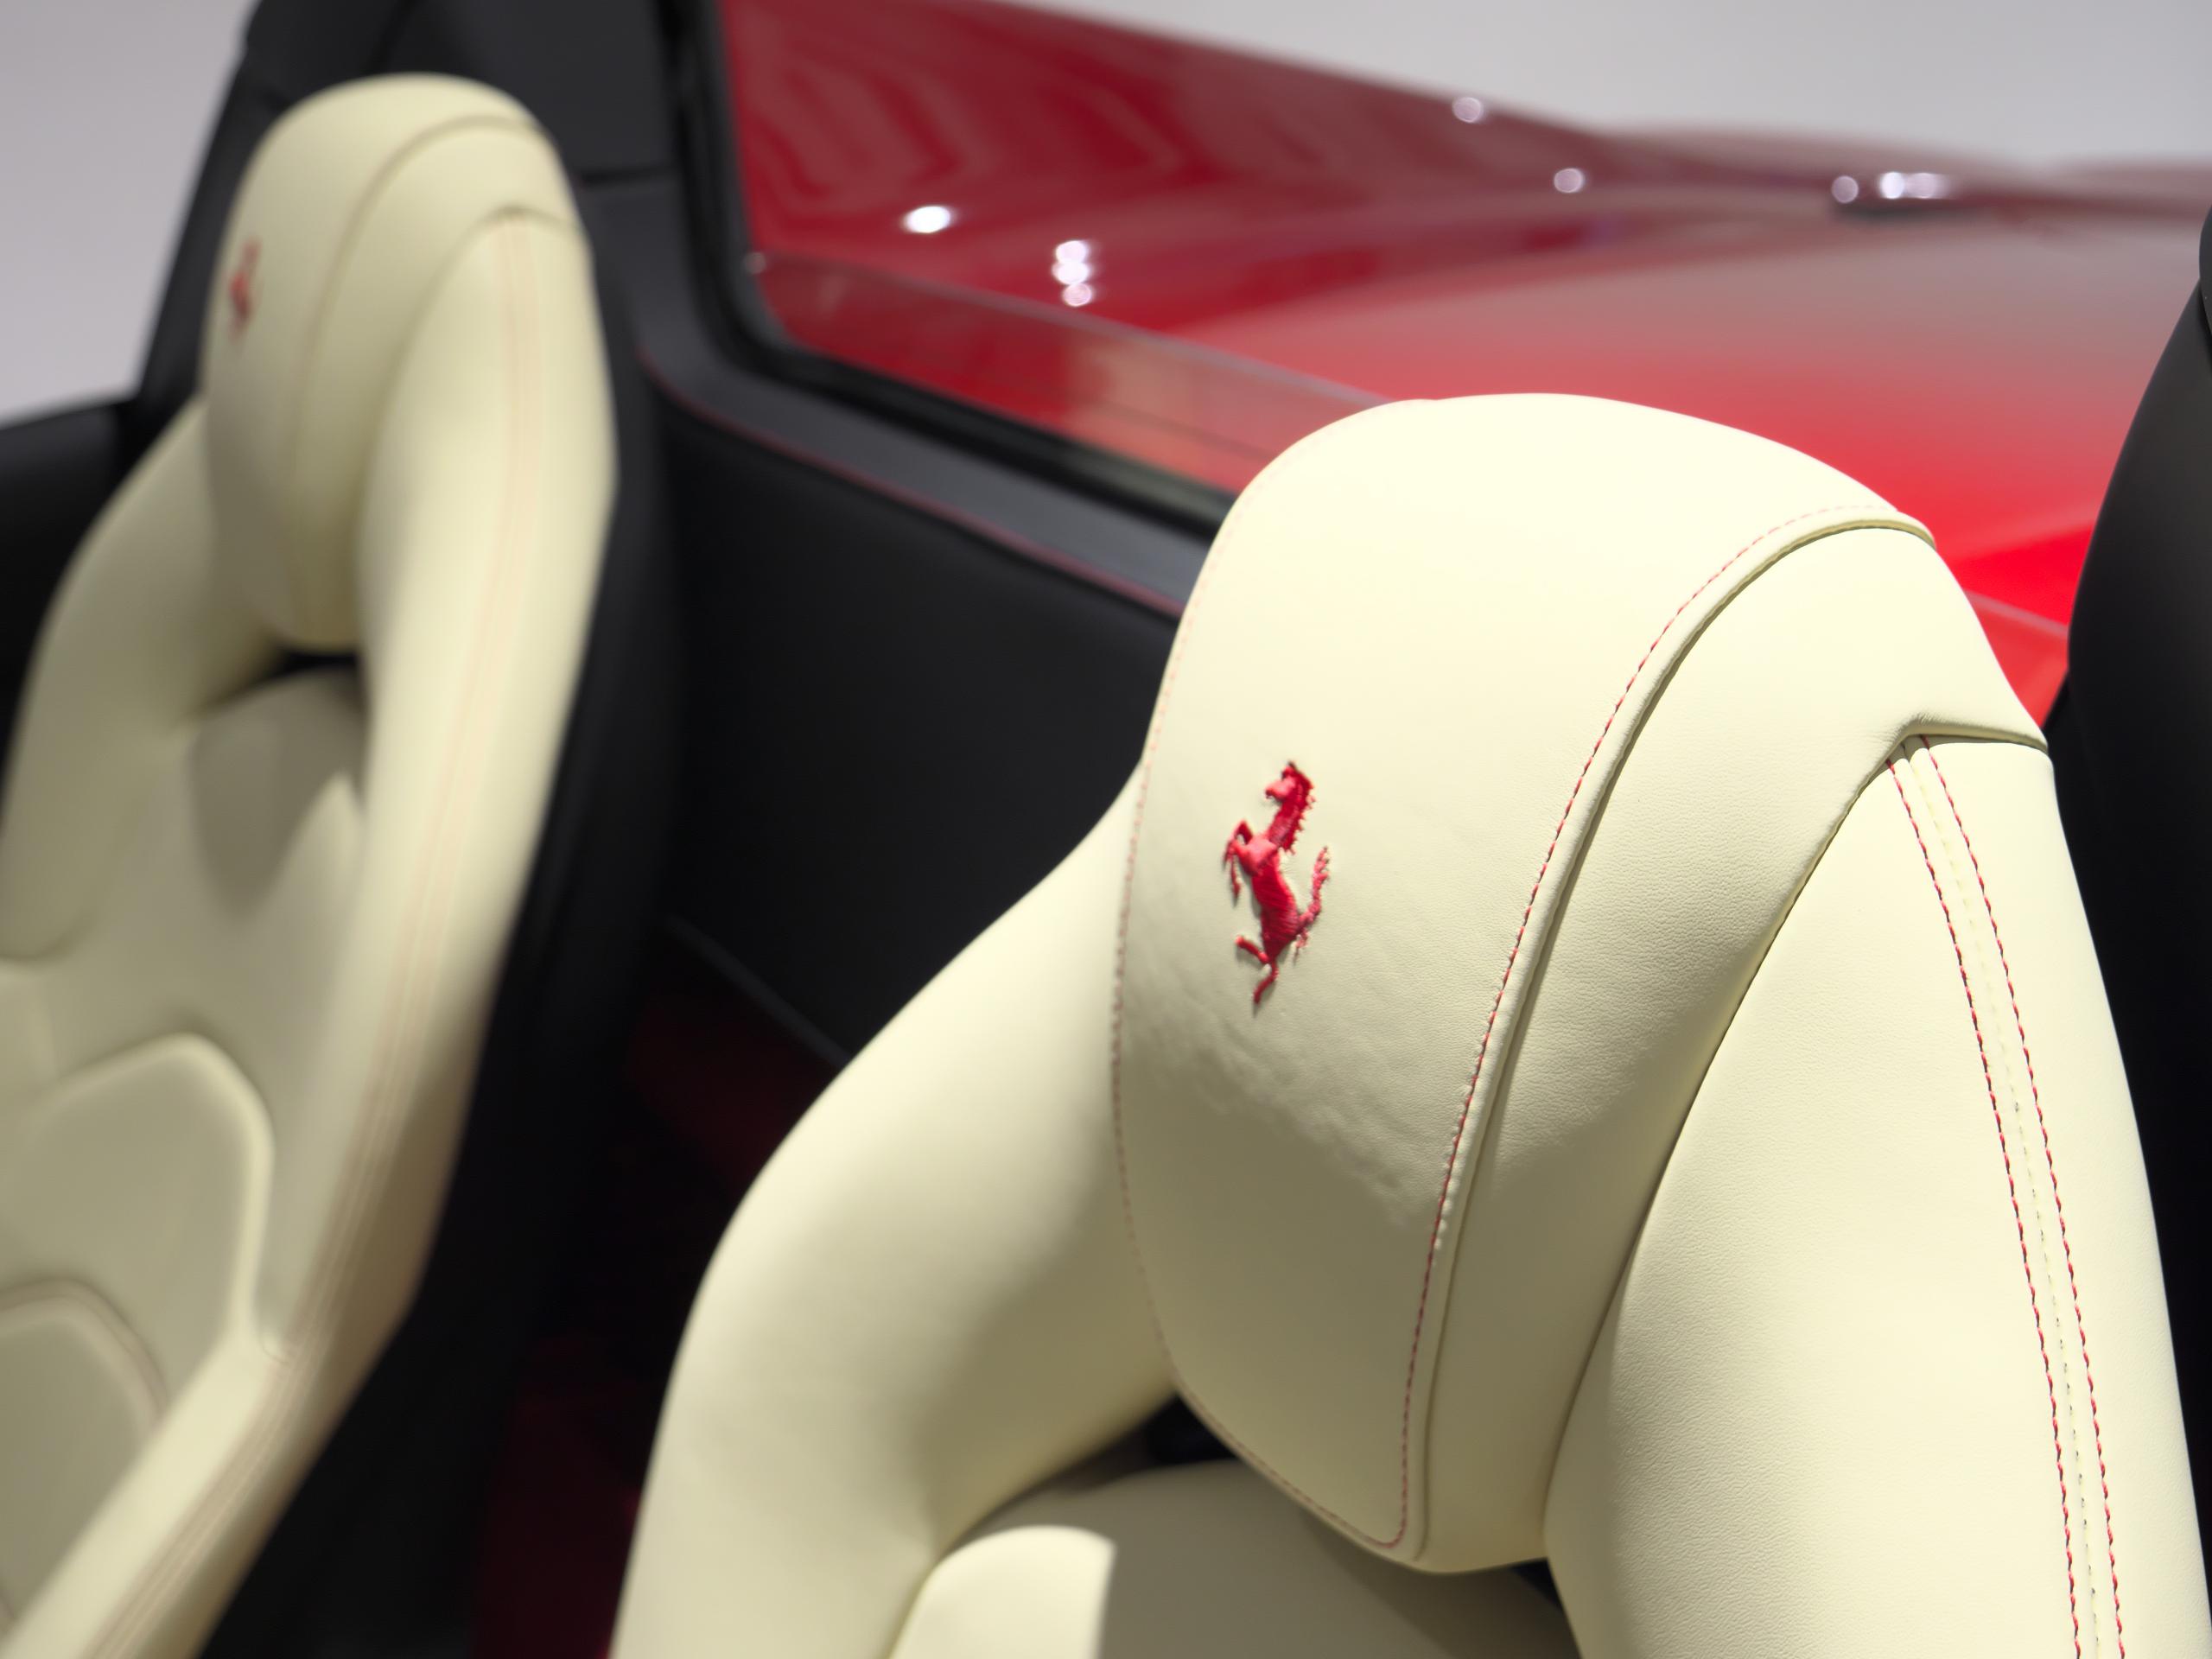 Ferrari 488 Spider “Rosso Corsa Metallic”